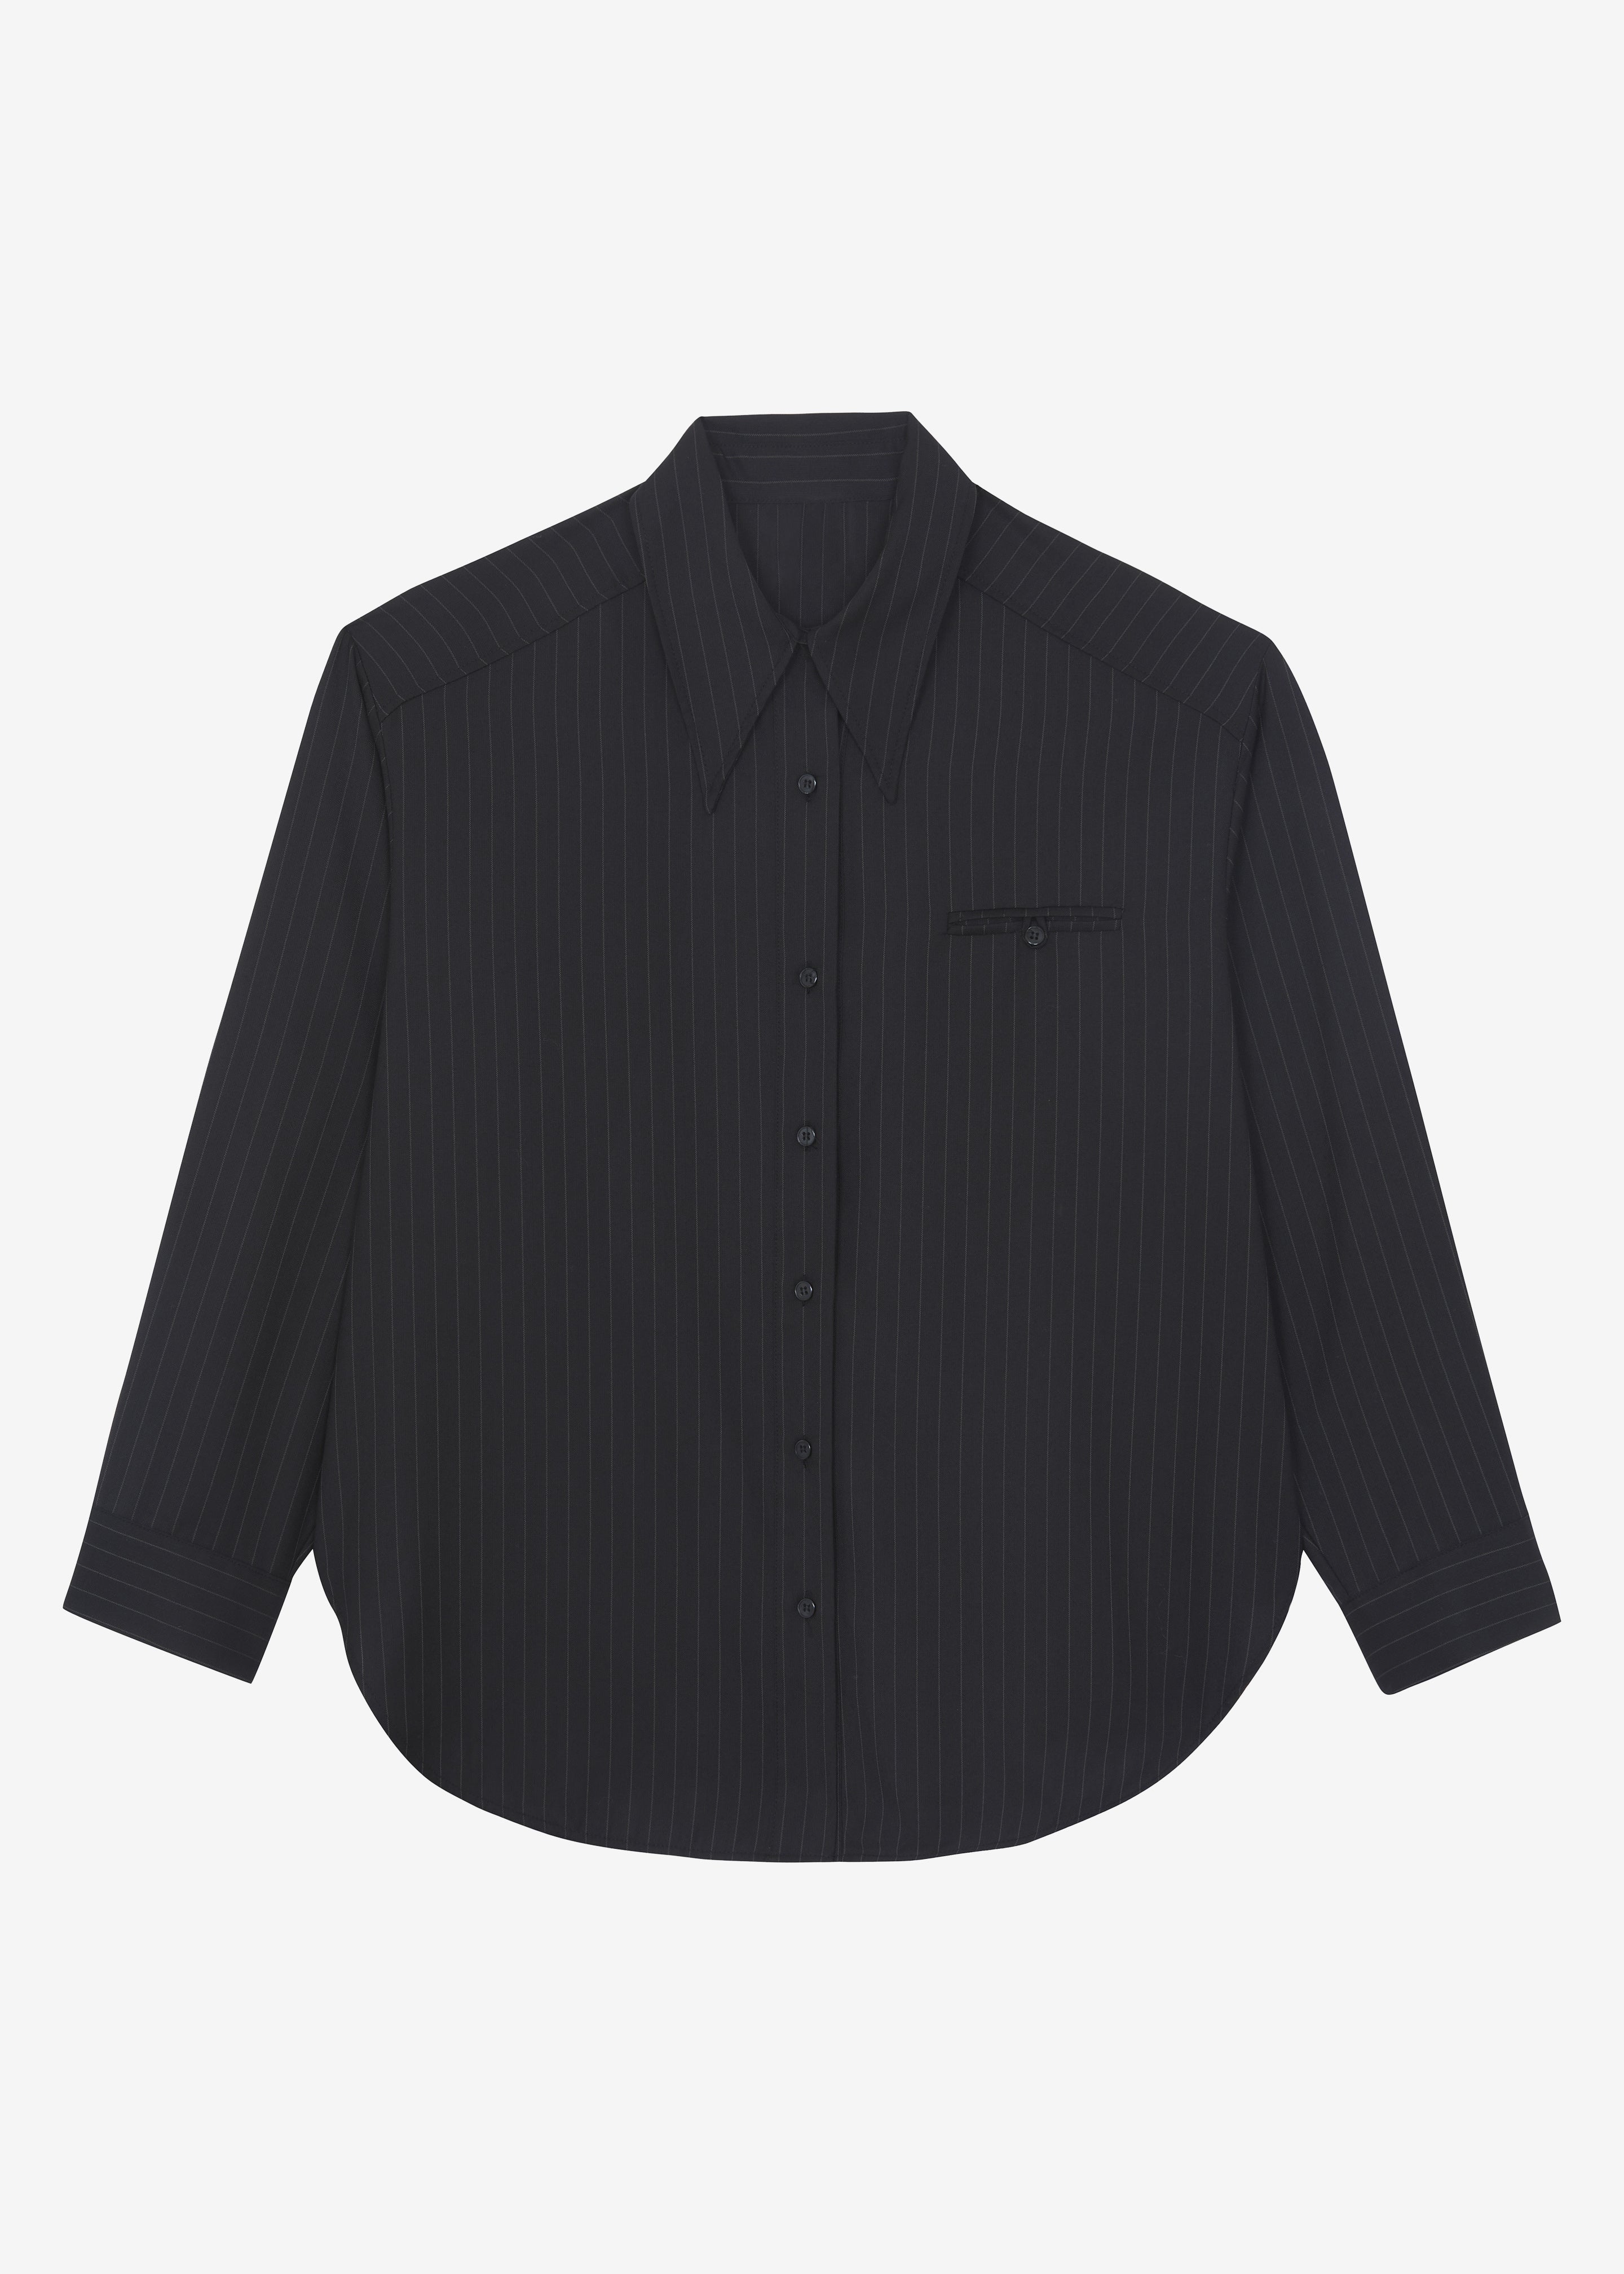 Kerry Button Up Shirt - Black Pinstripe - 17